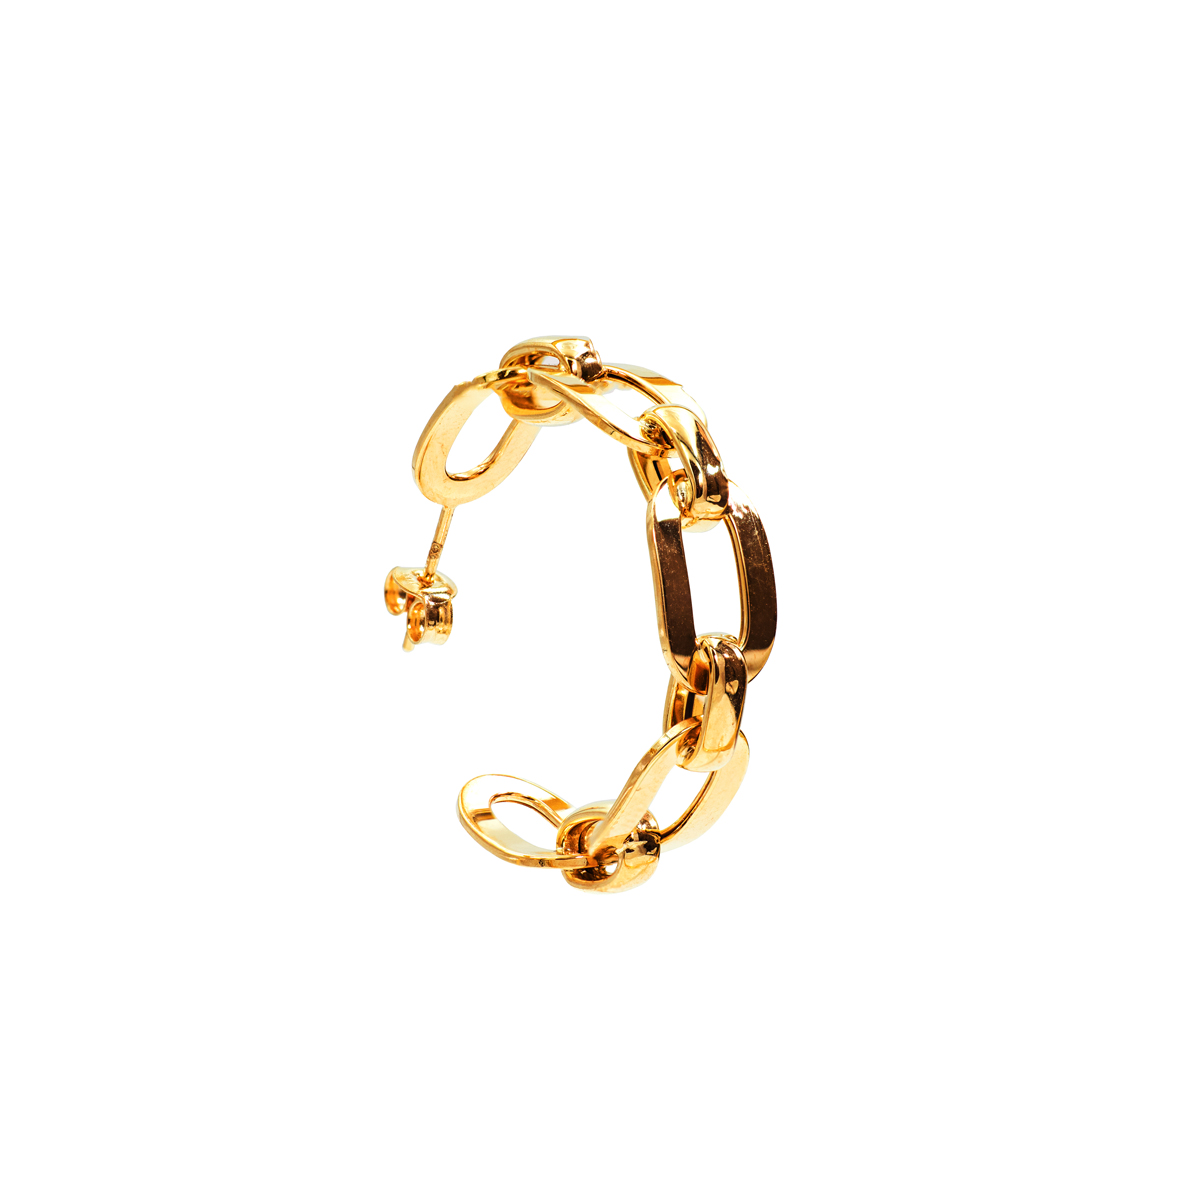 Chain Link C Hoop Earrings in 14k Yellow Gold